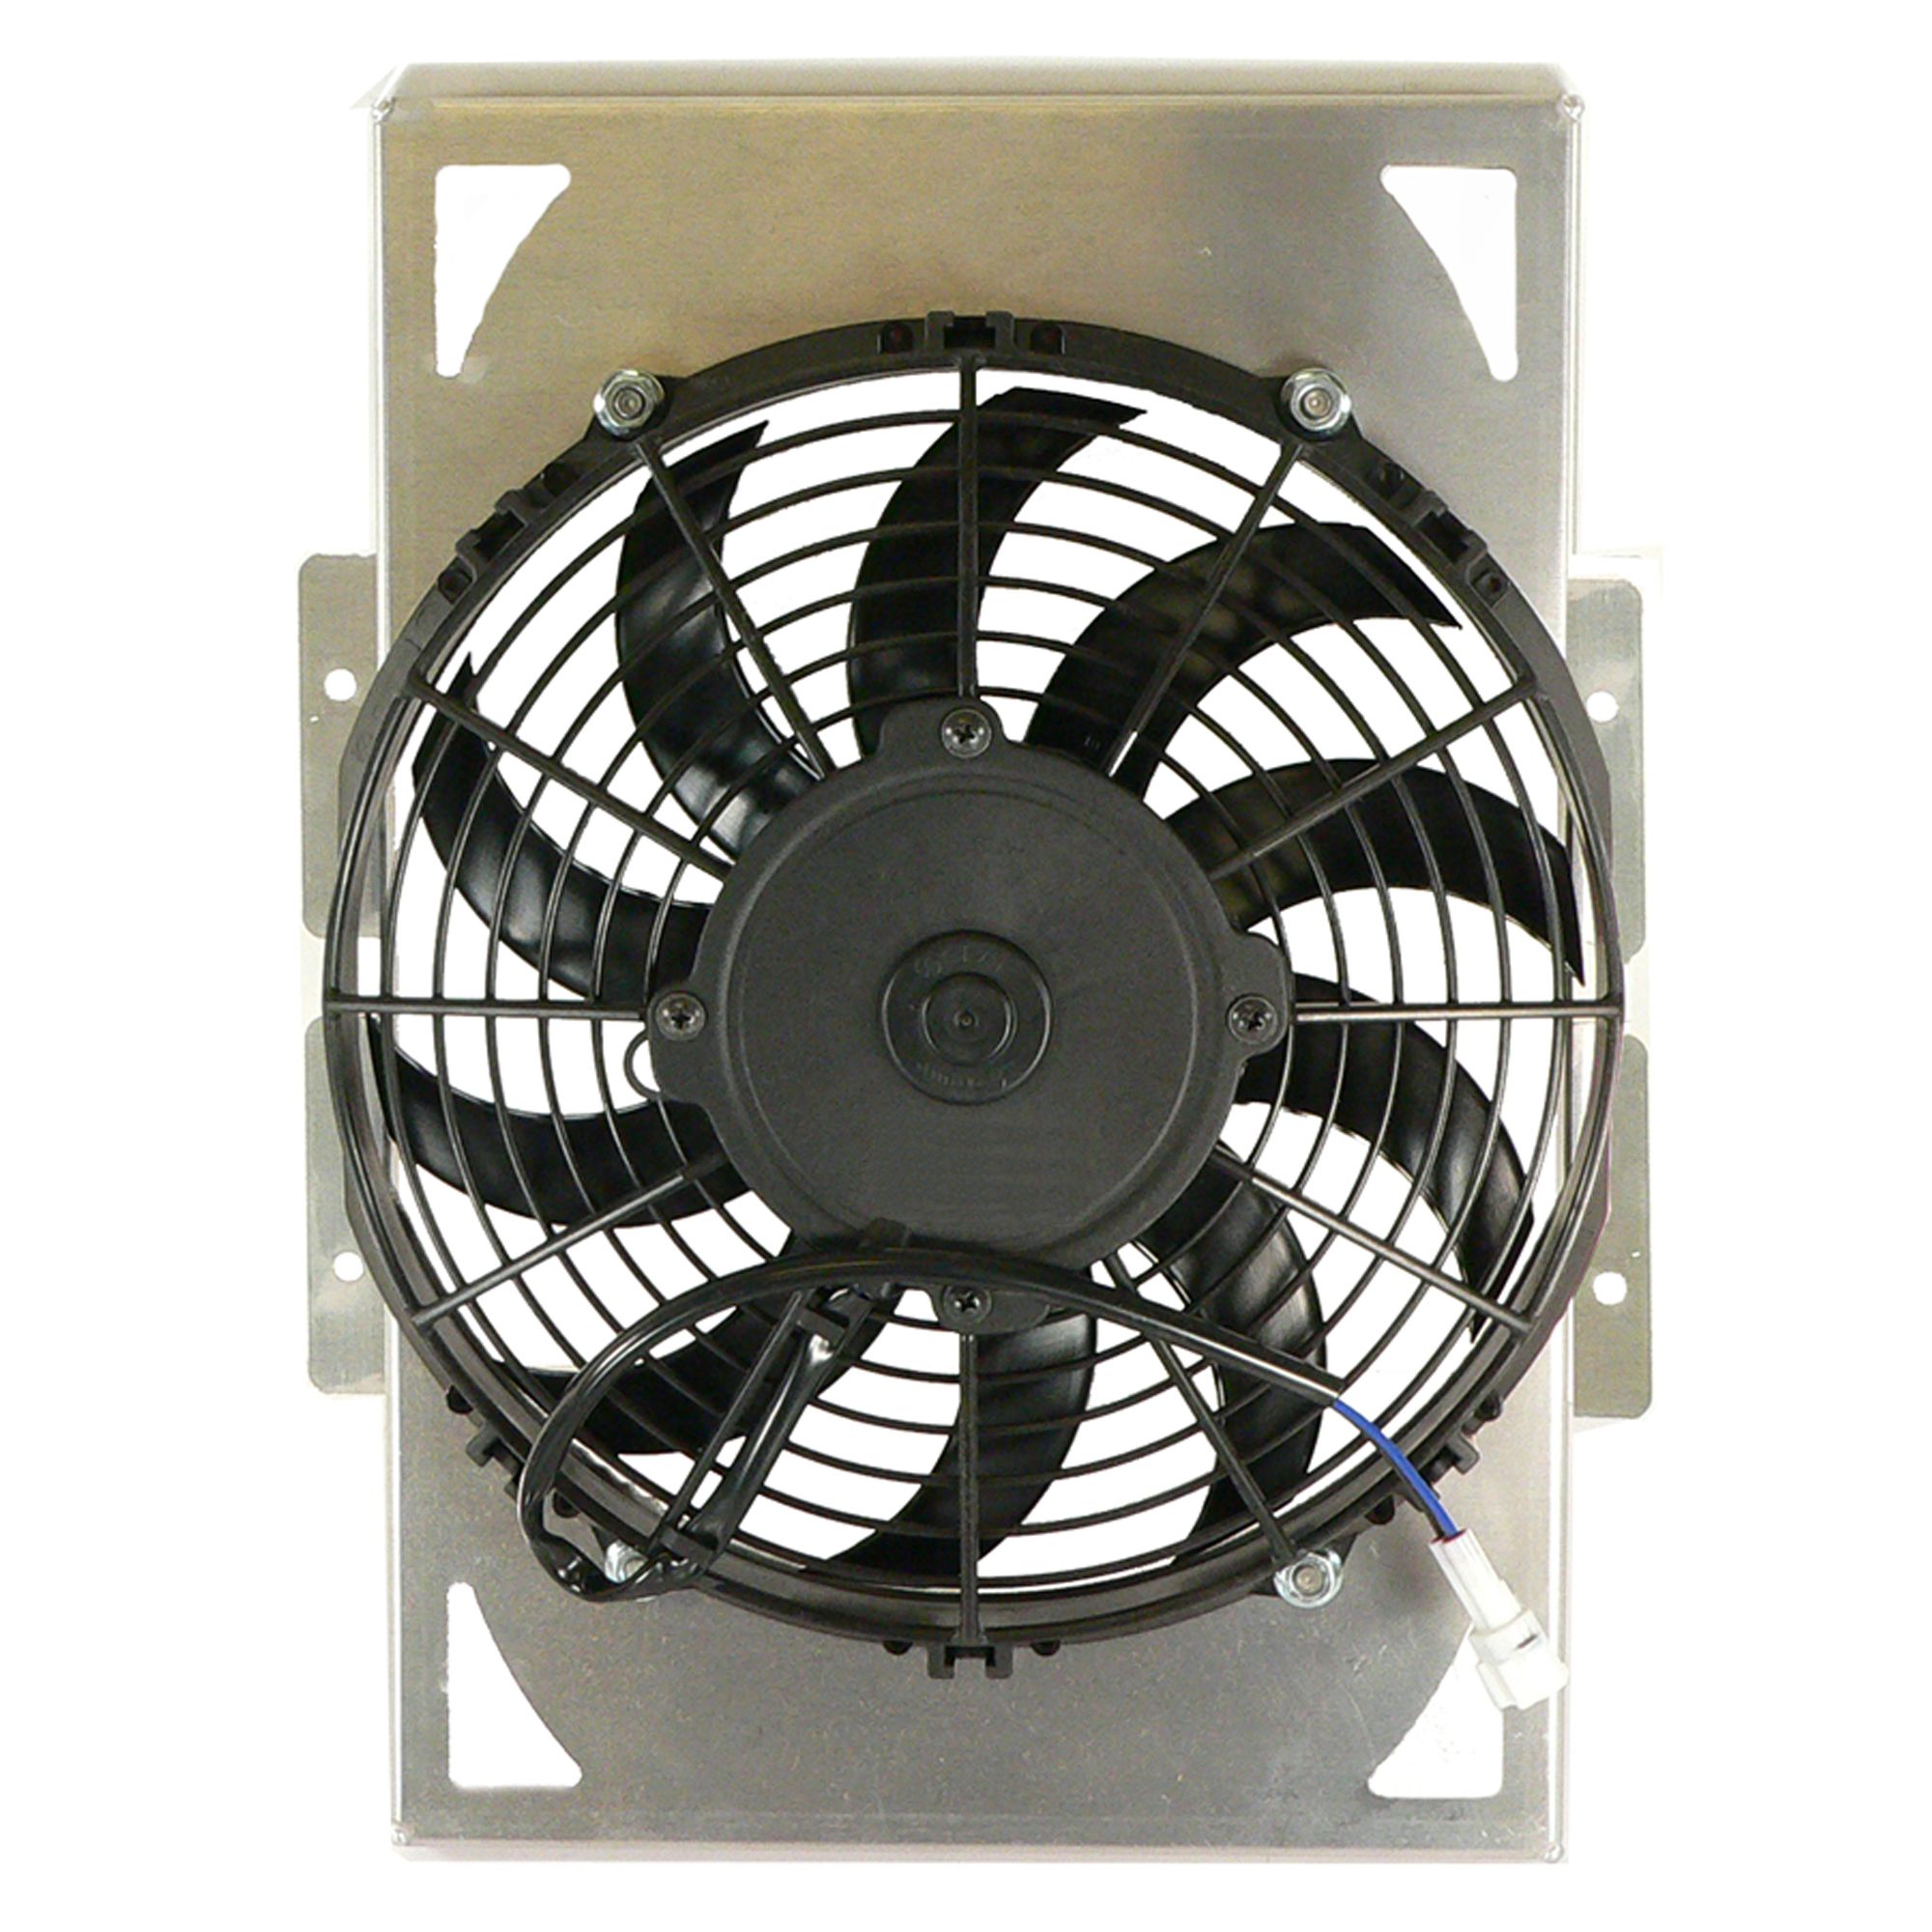 Obrázek produktu Radiator fan motor ARROWHEAD RFM0007 RFM0007